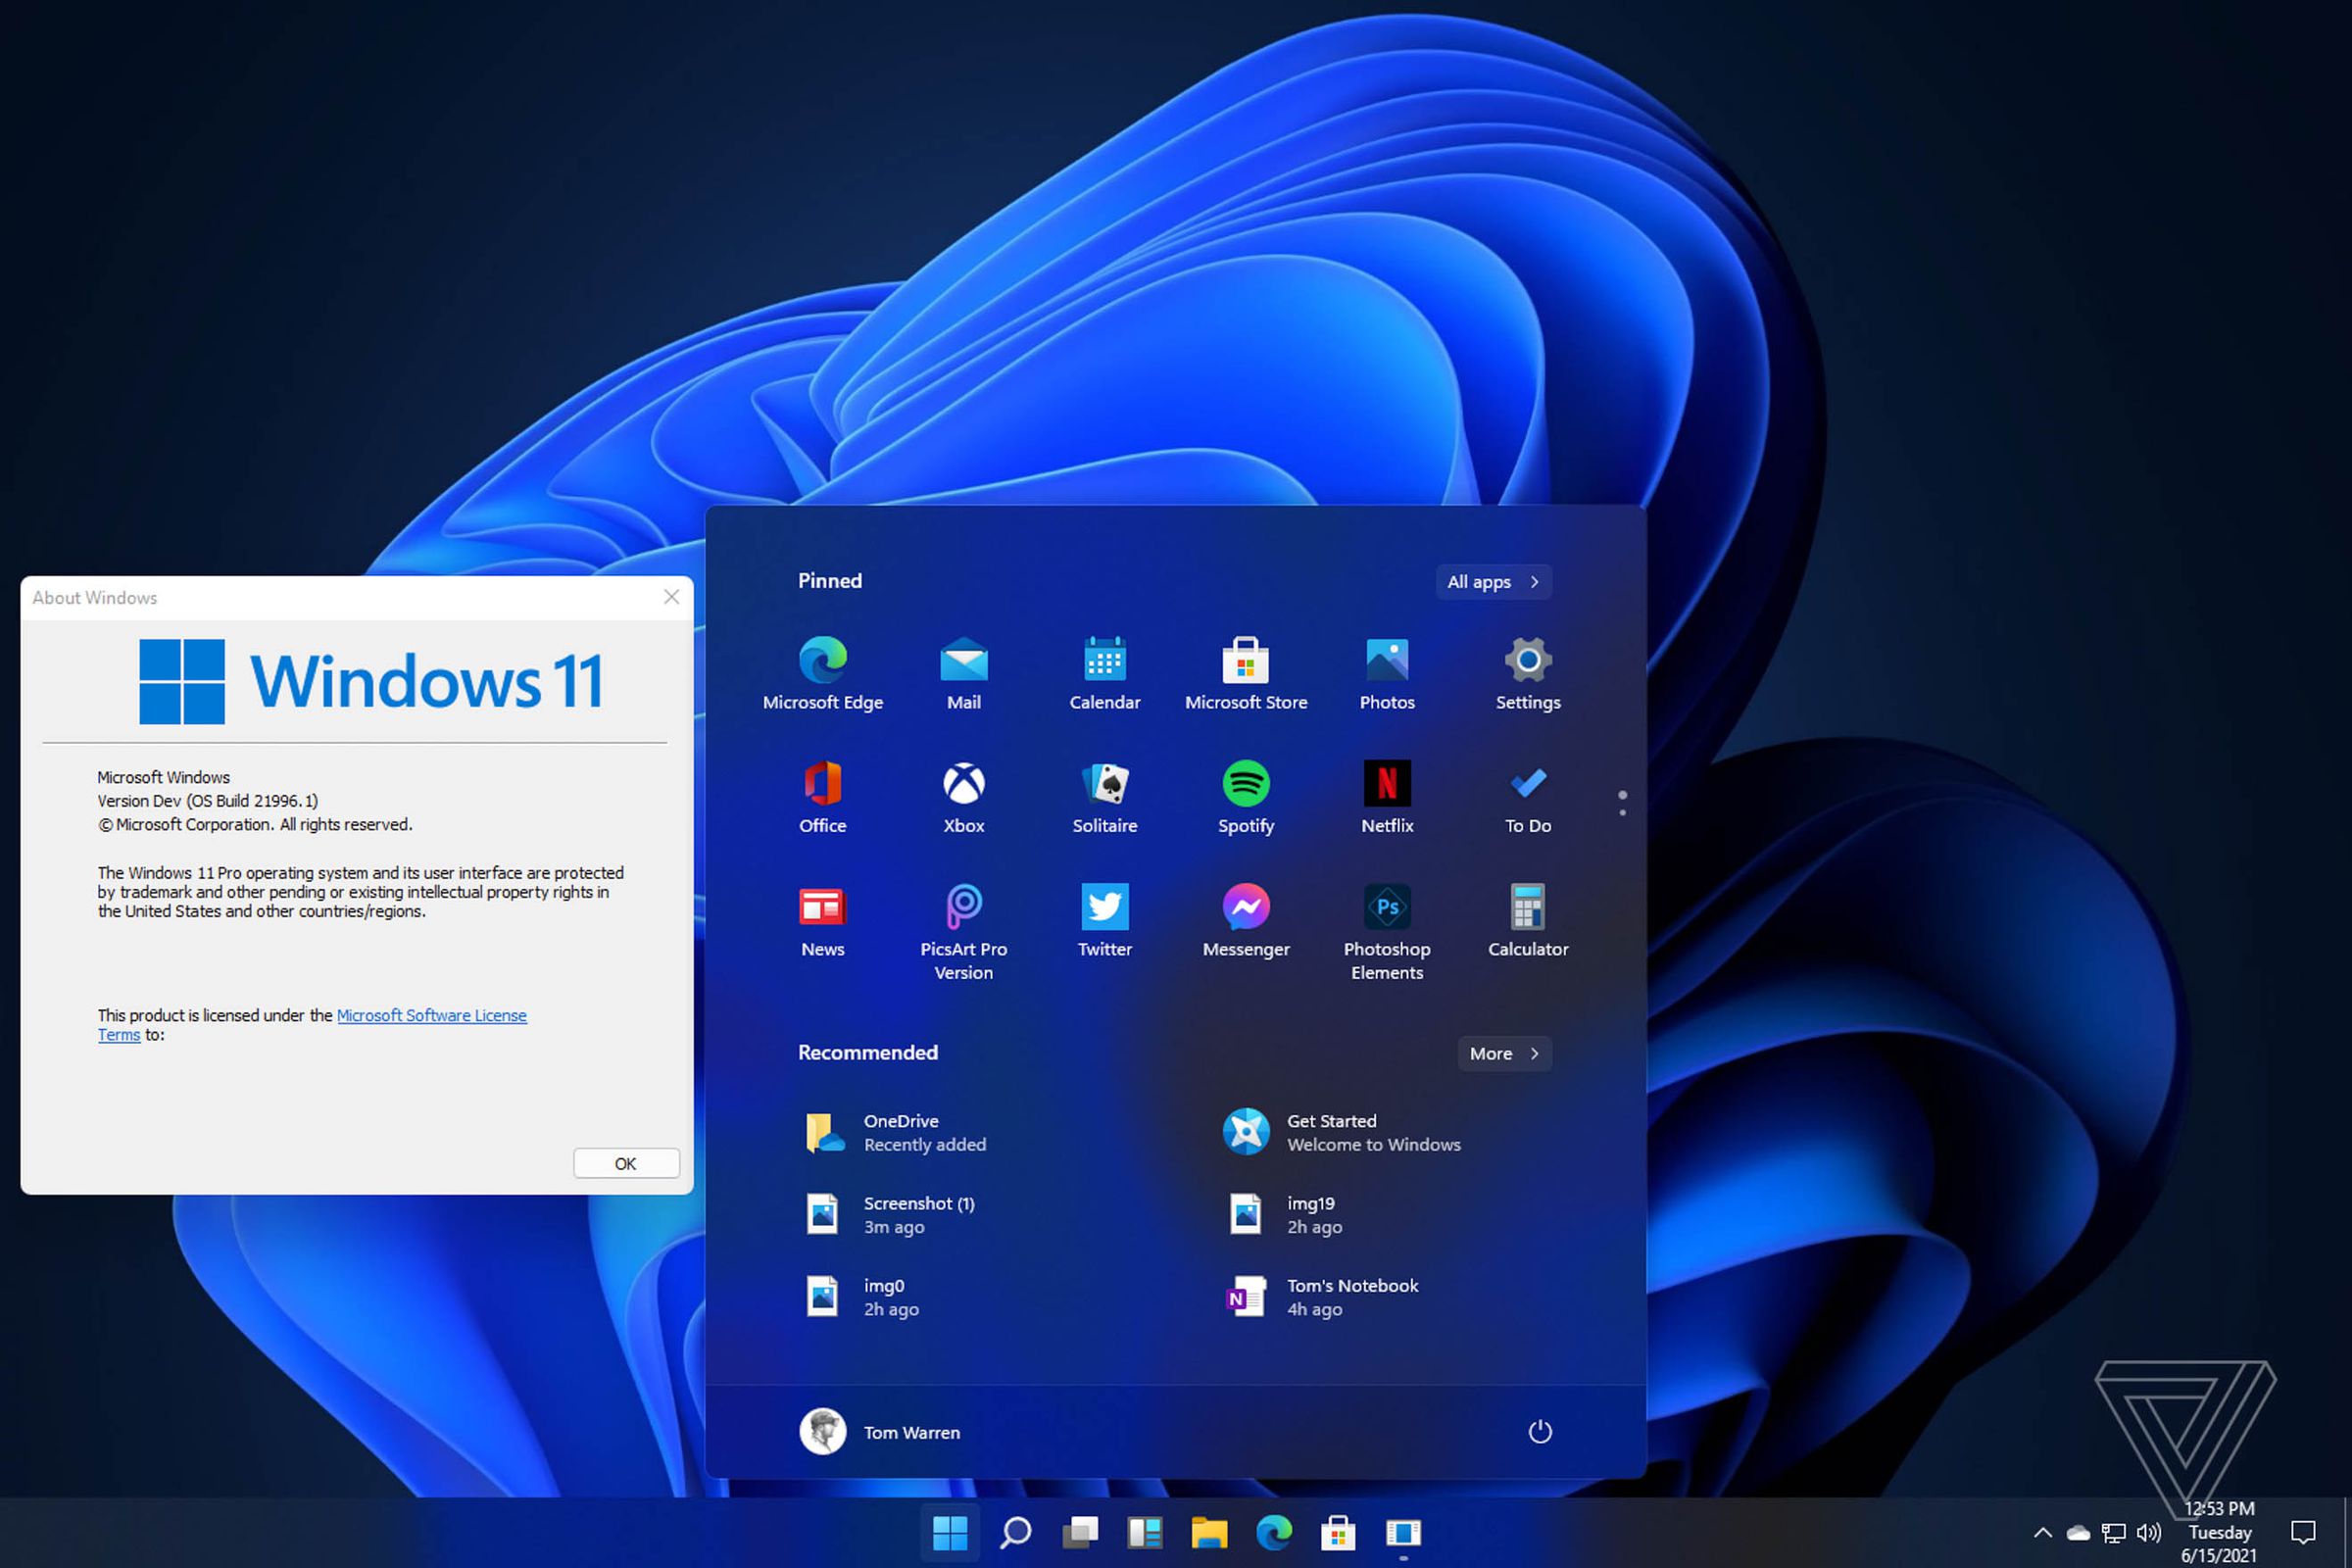 The new Windows 11 UI.